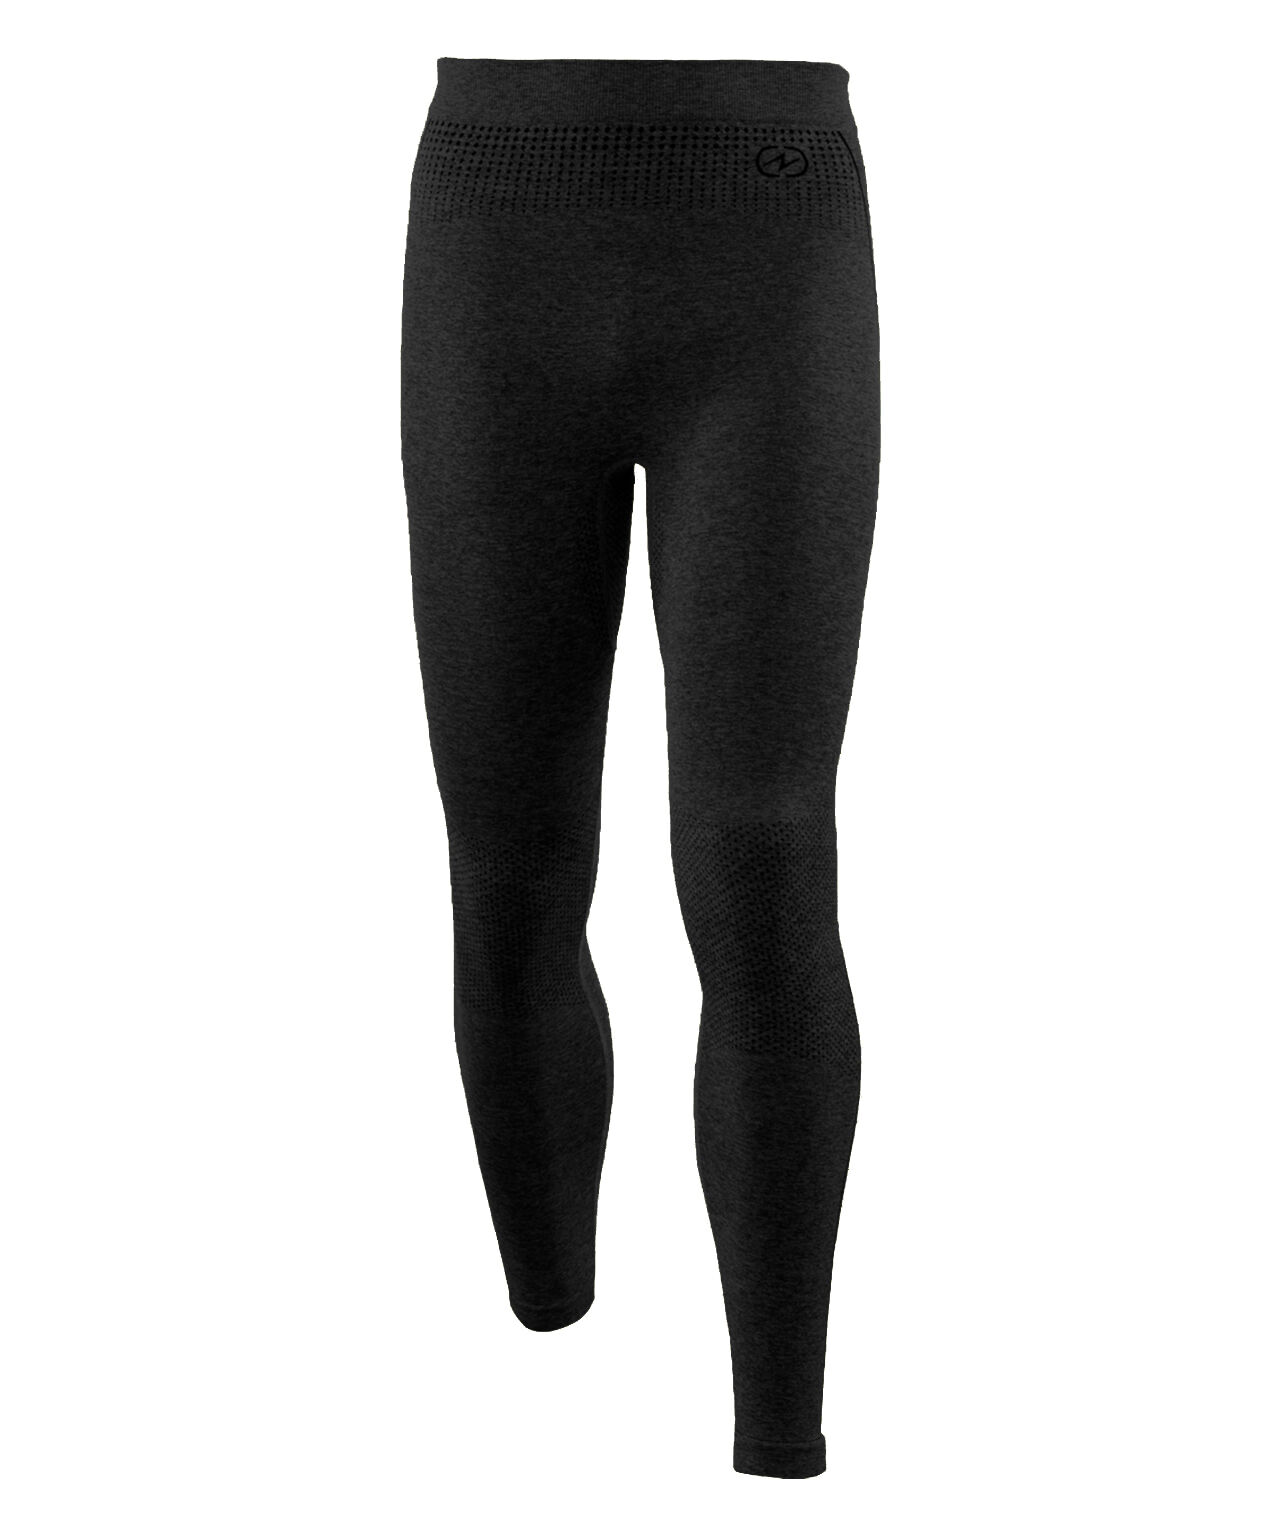 Damart Sport - Activ Body 2 - Running trousers - Men's